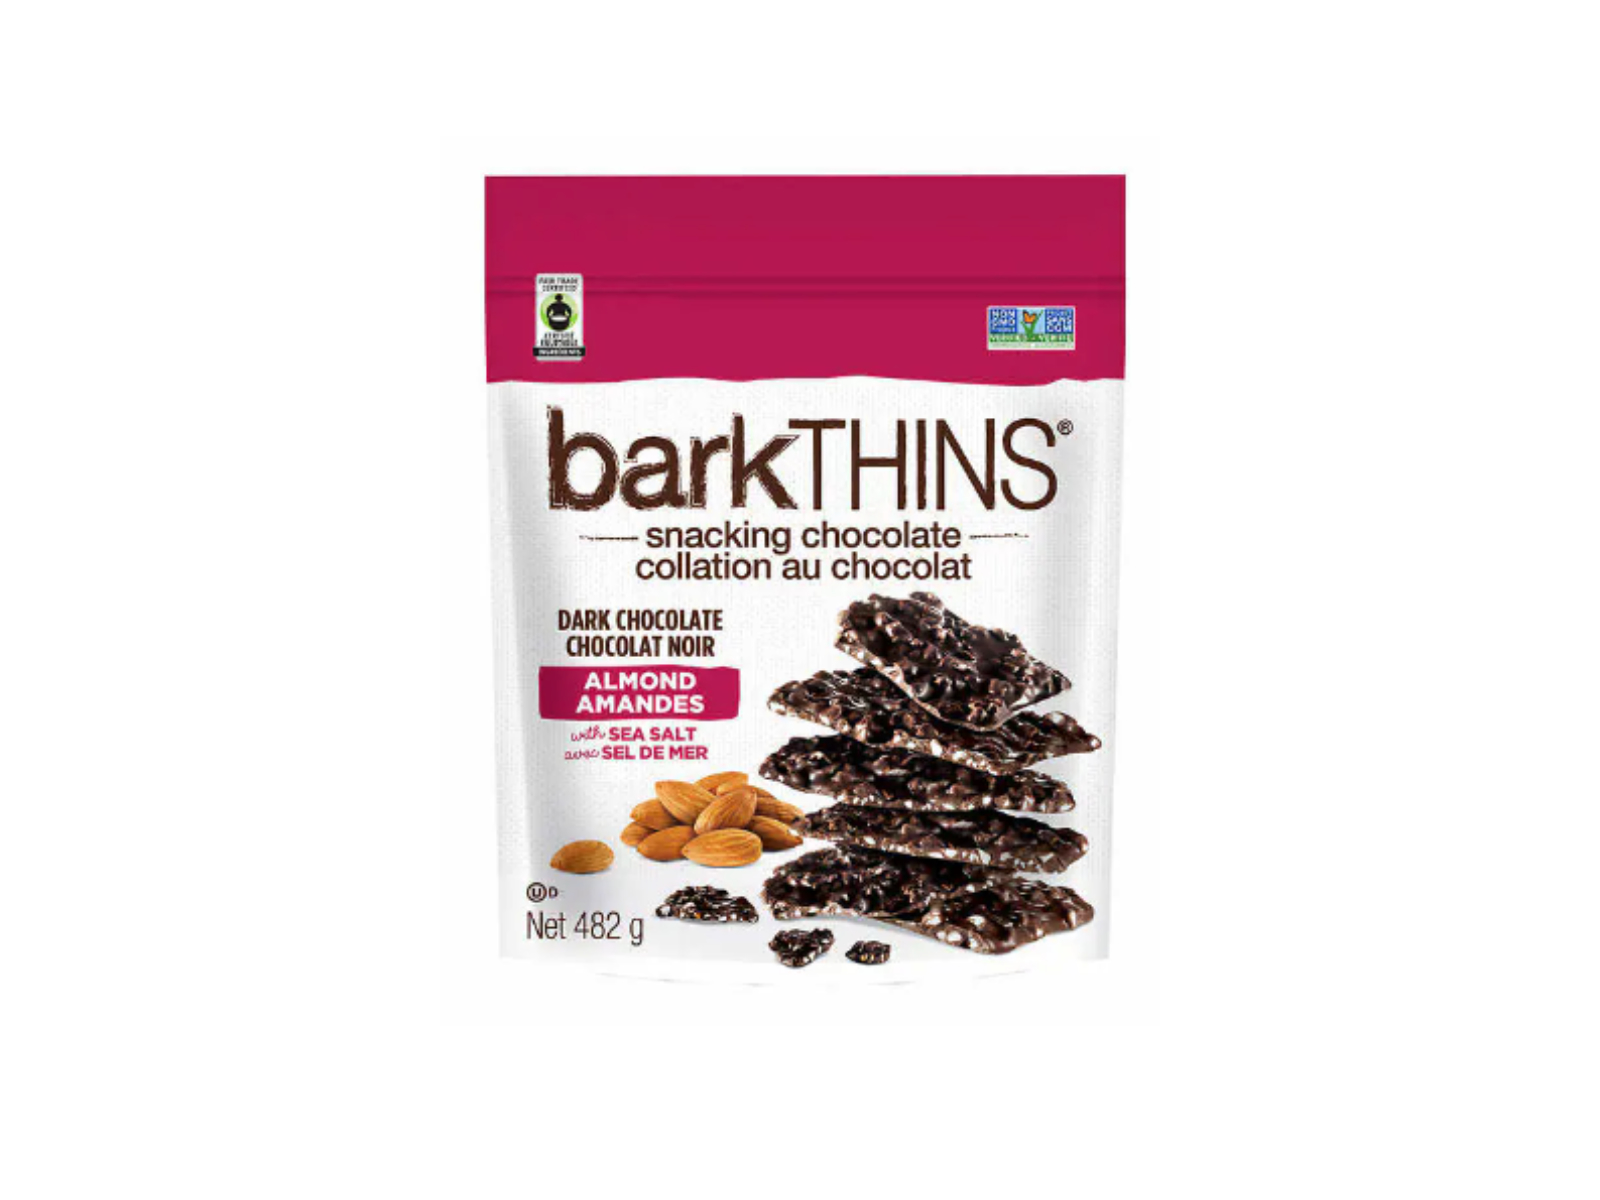 Barkthins Dark Chocolate and Almonds